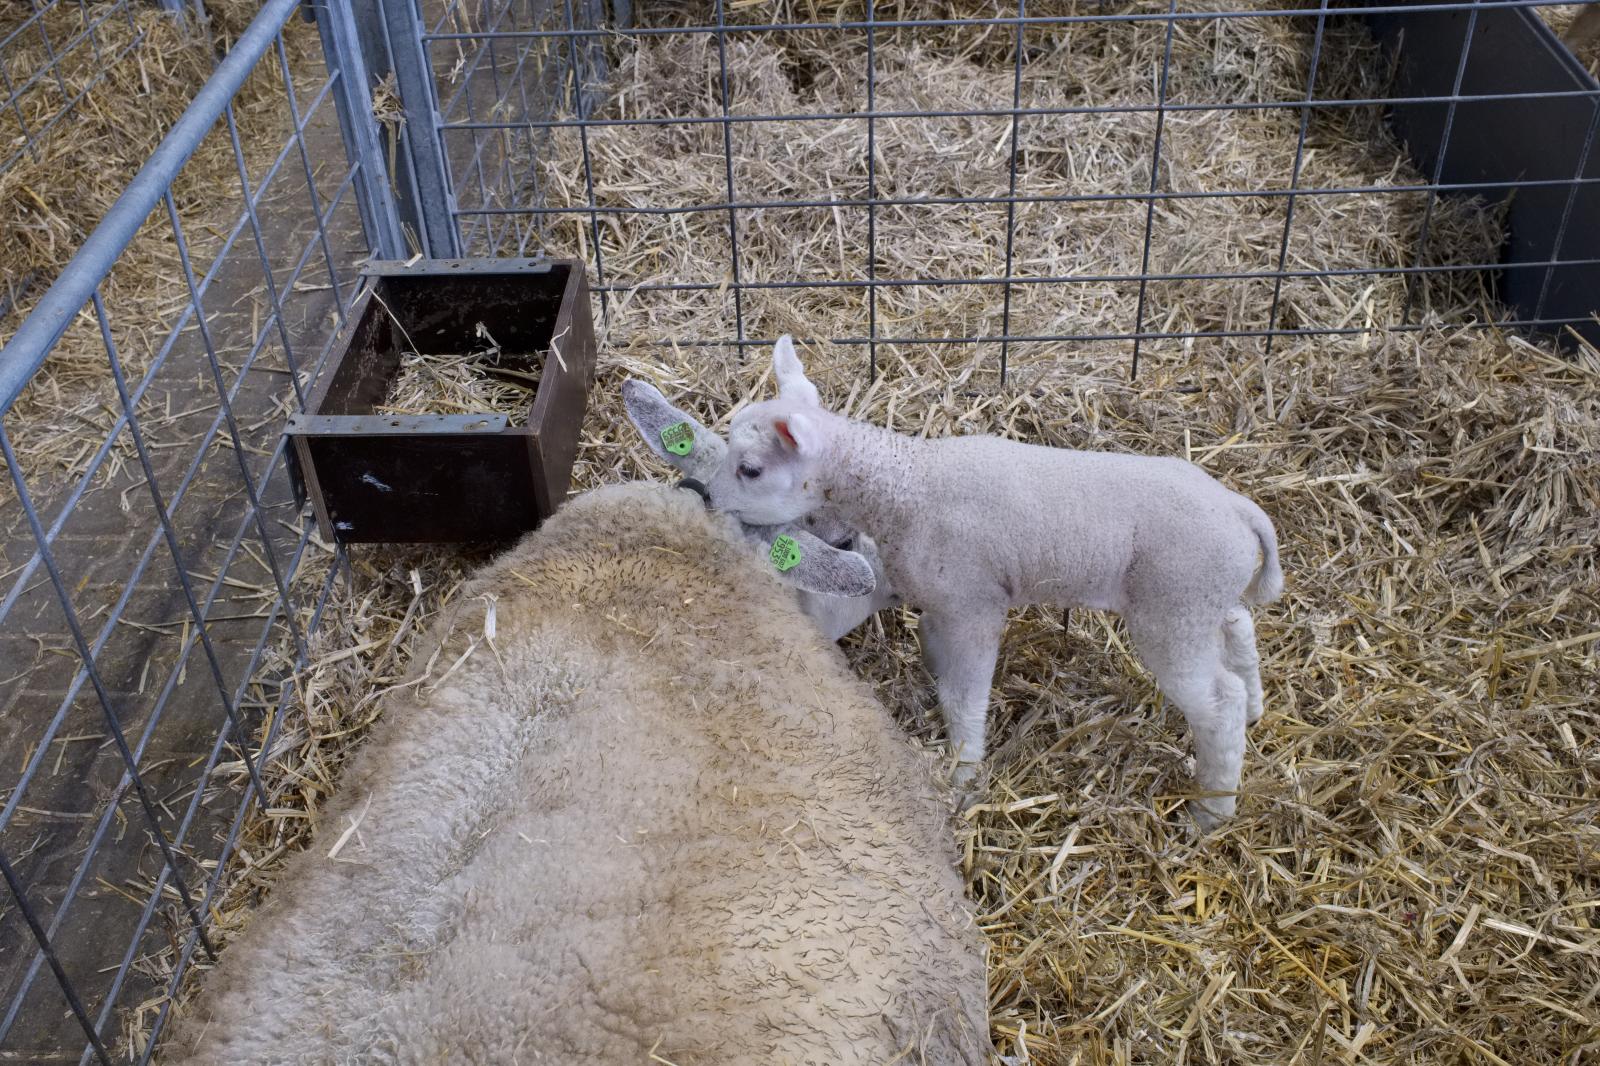 Texel Sheep and Lambs | Buy this image